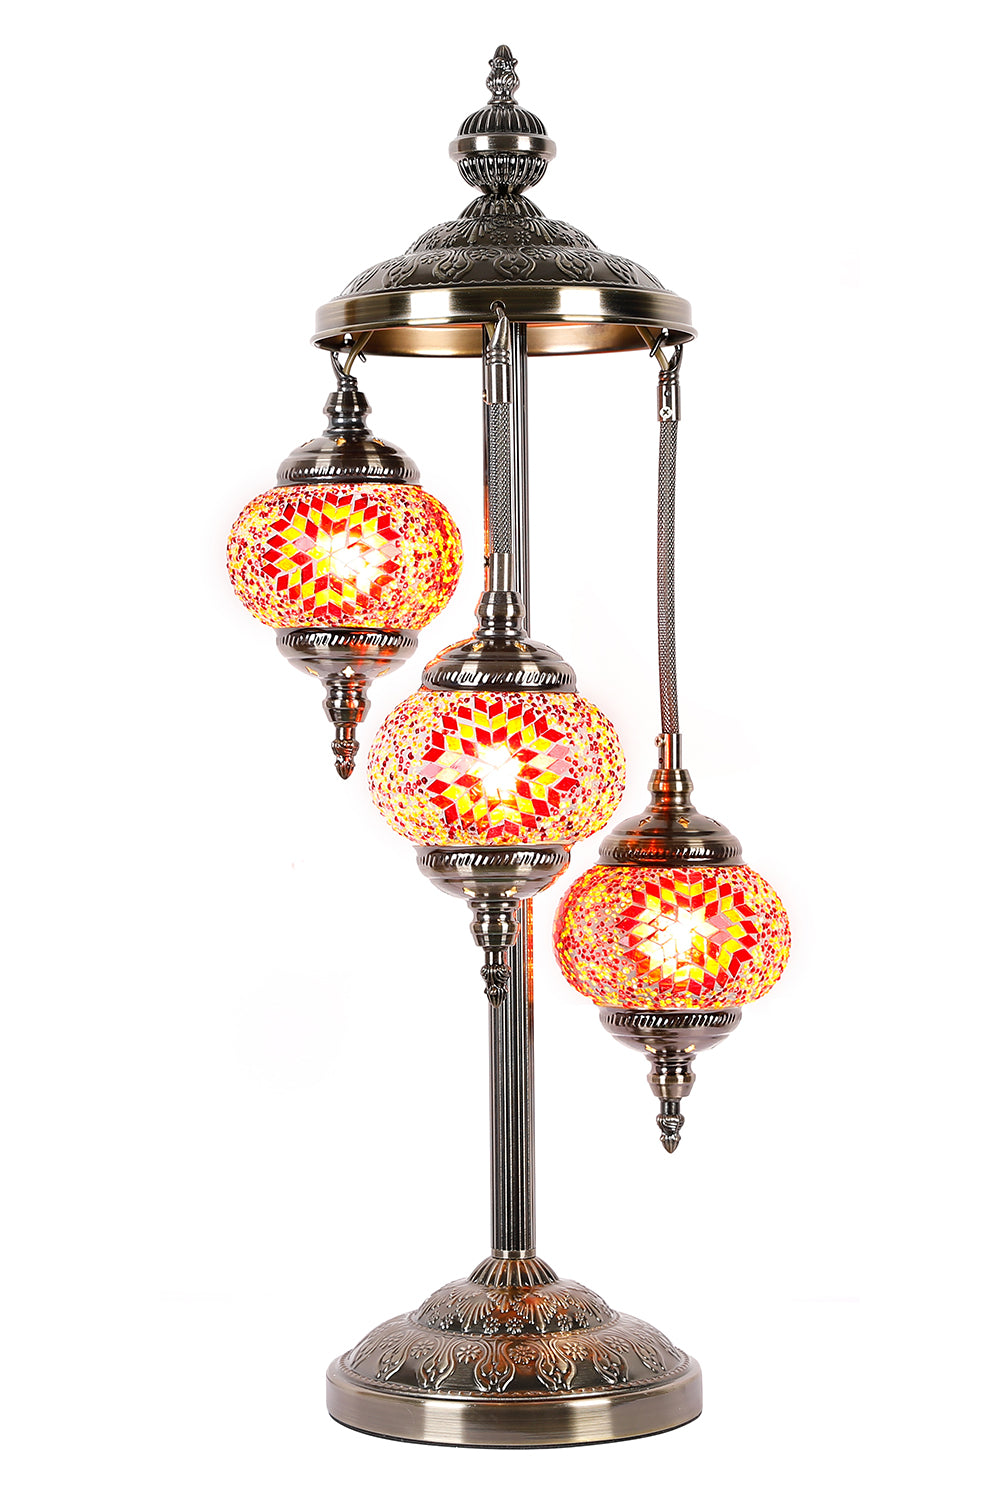 Turkish Mosaic Lamp Multi-Coloured 3 Tier - Rivendell Shop